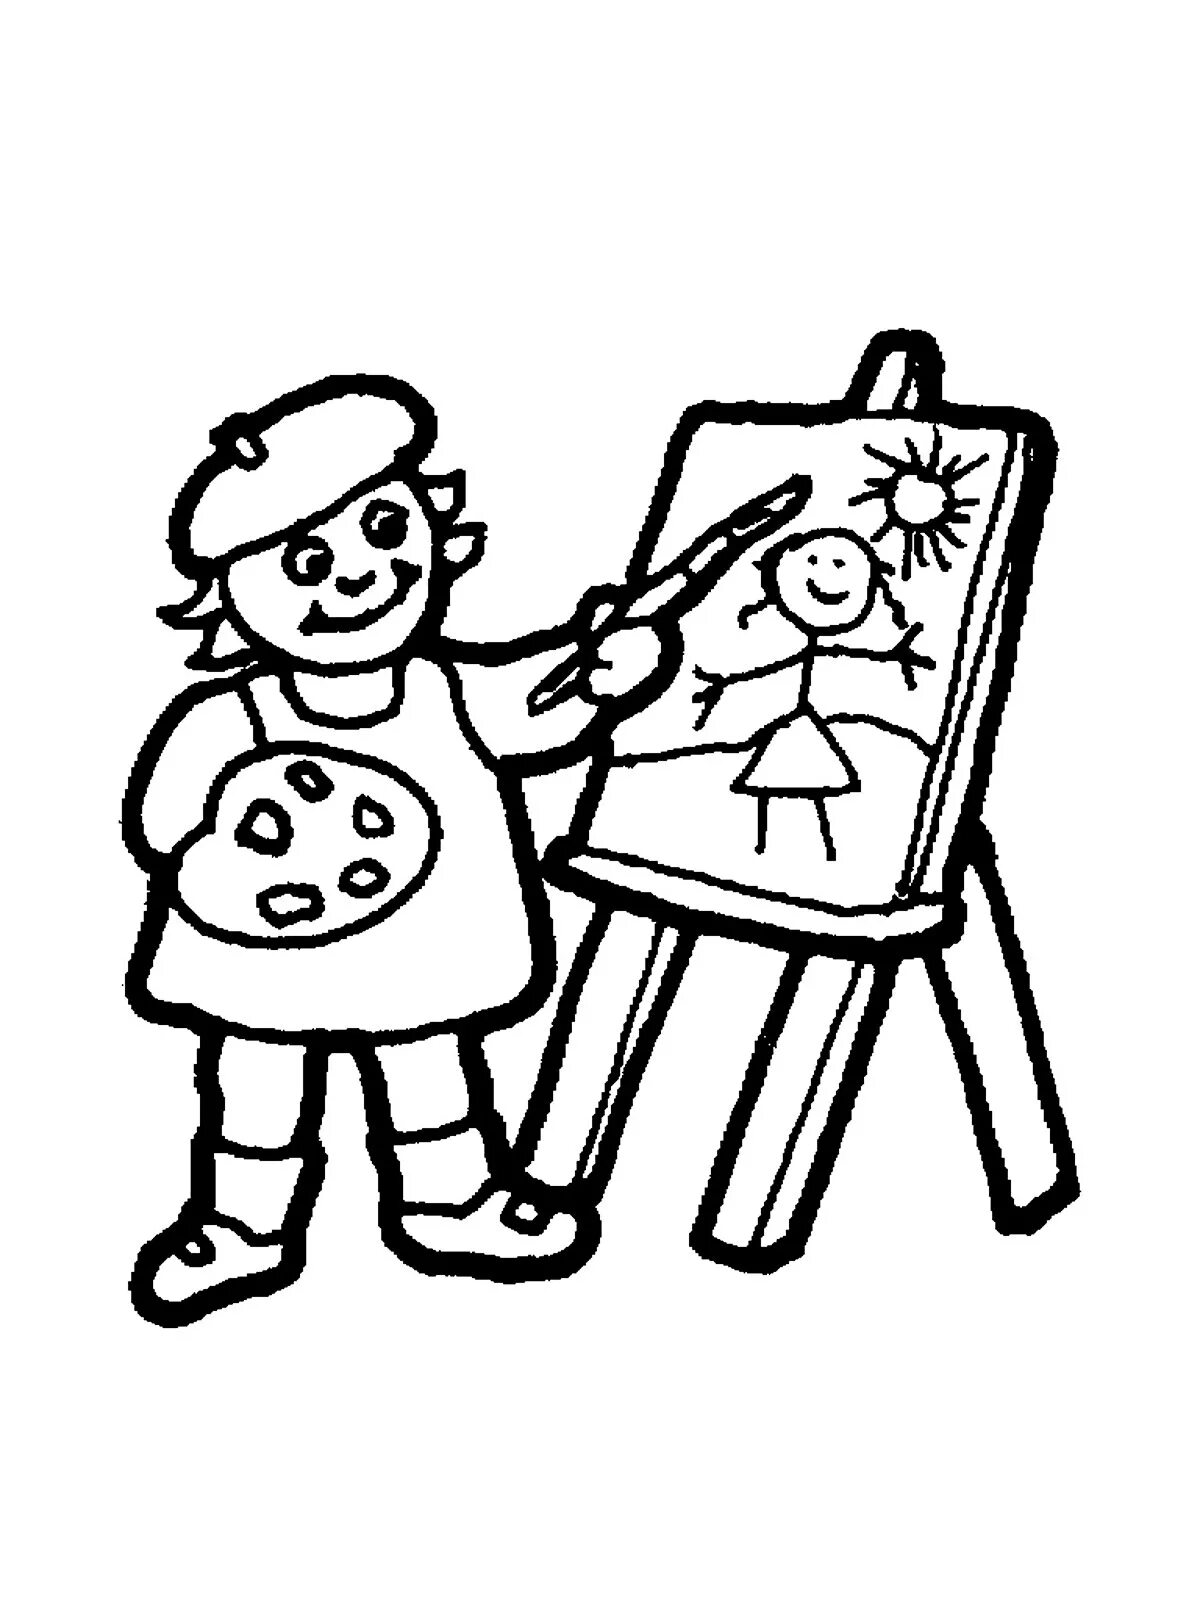 Joyful preschool coloring artist